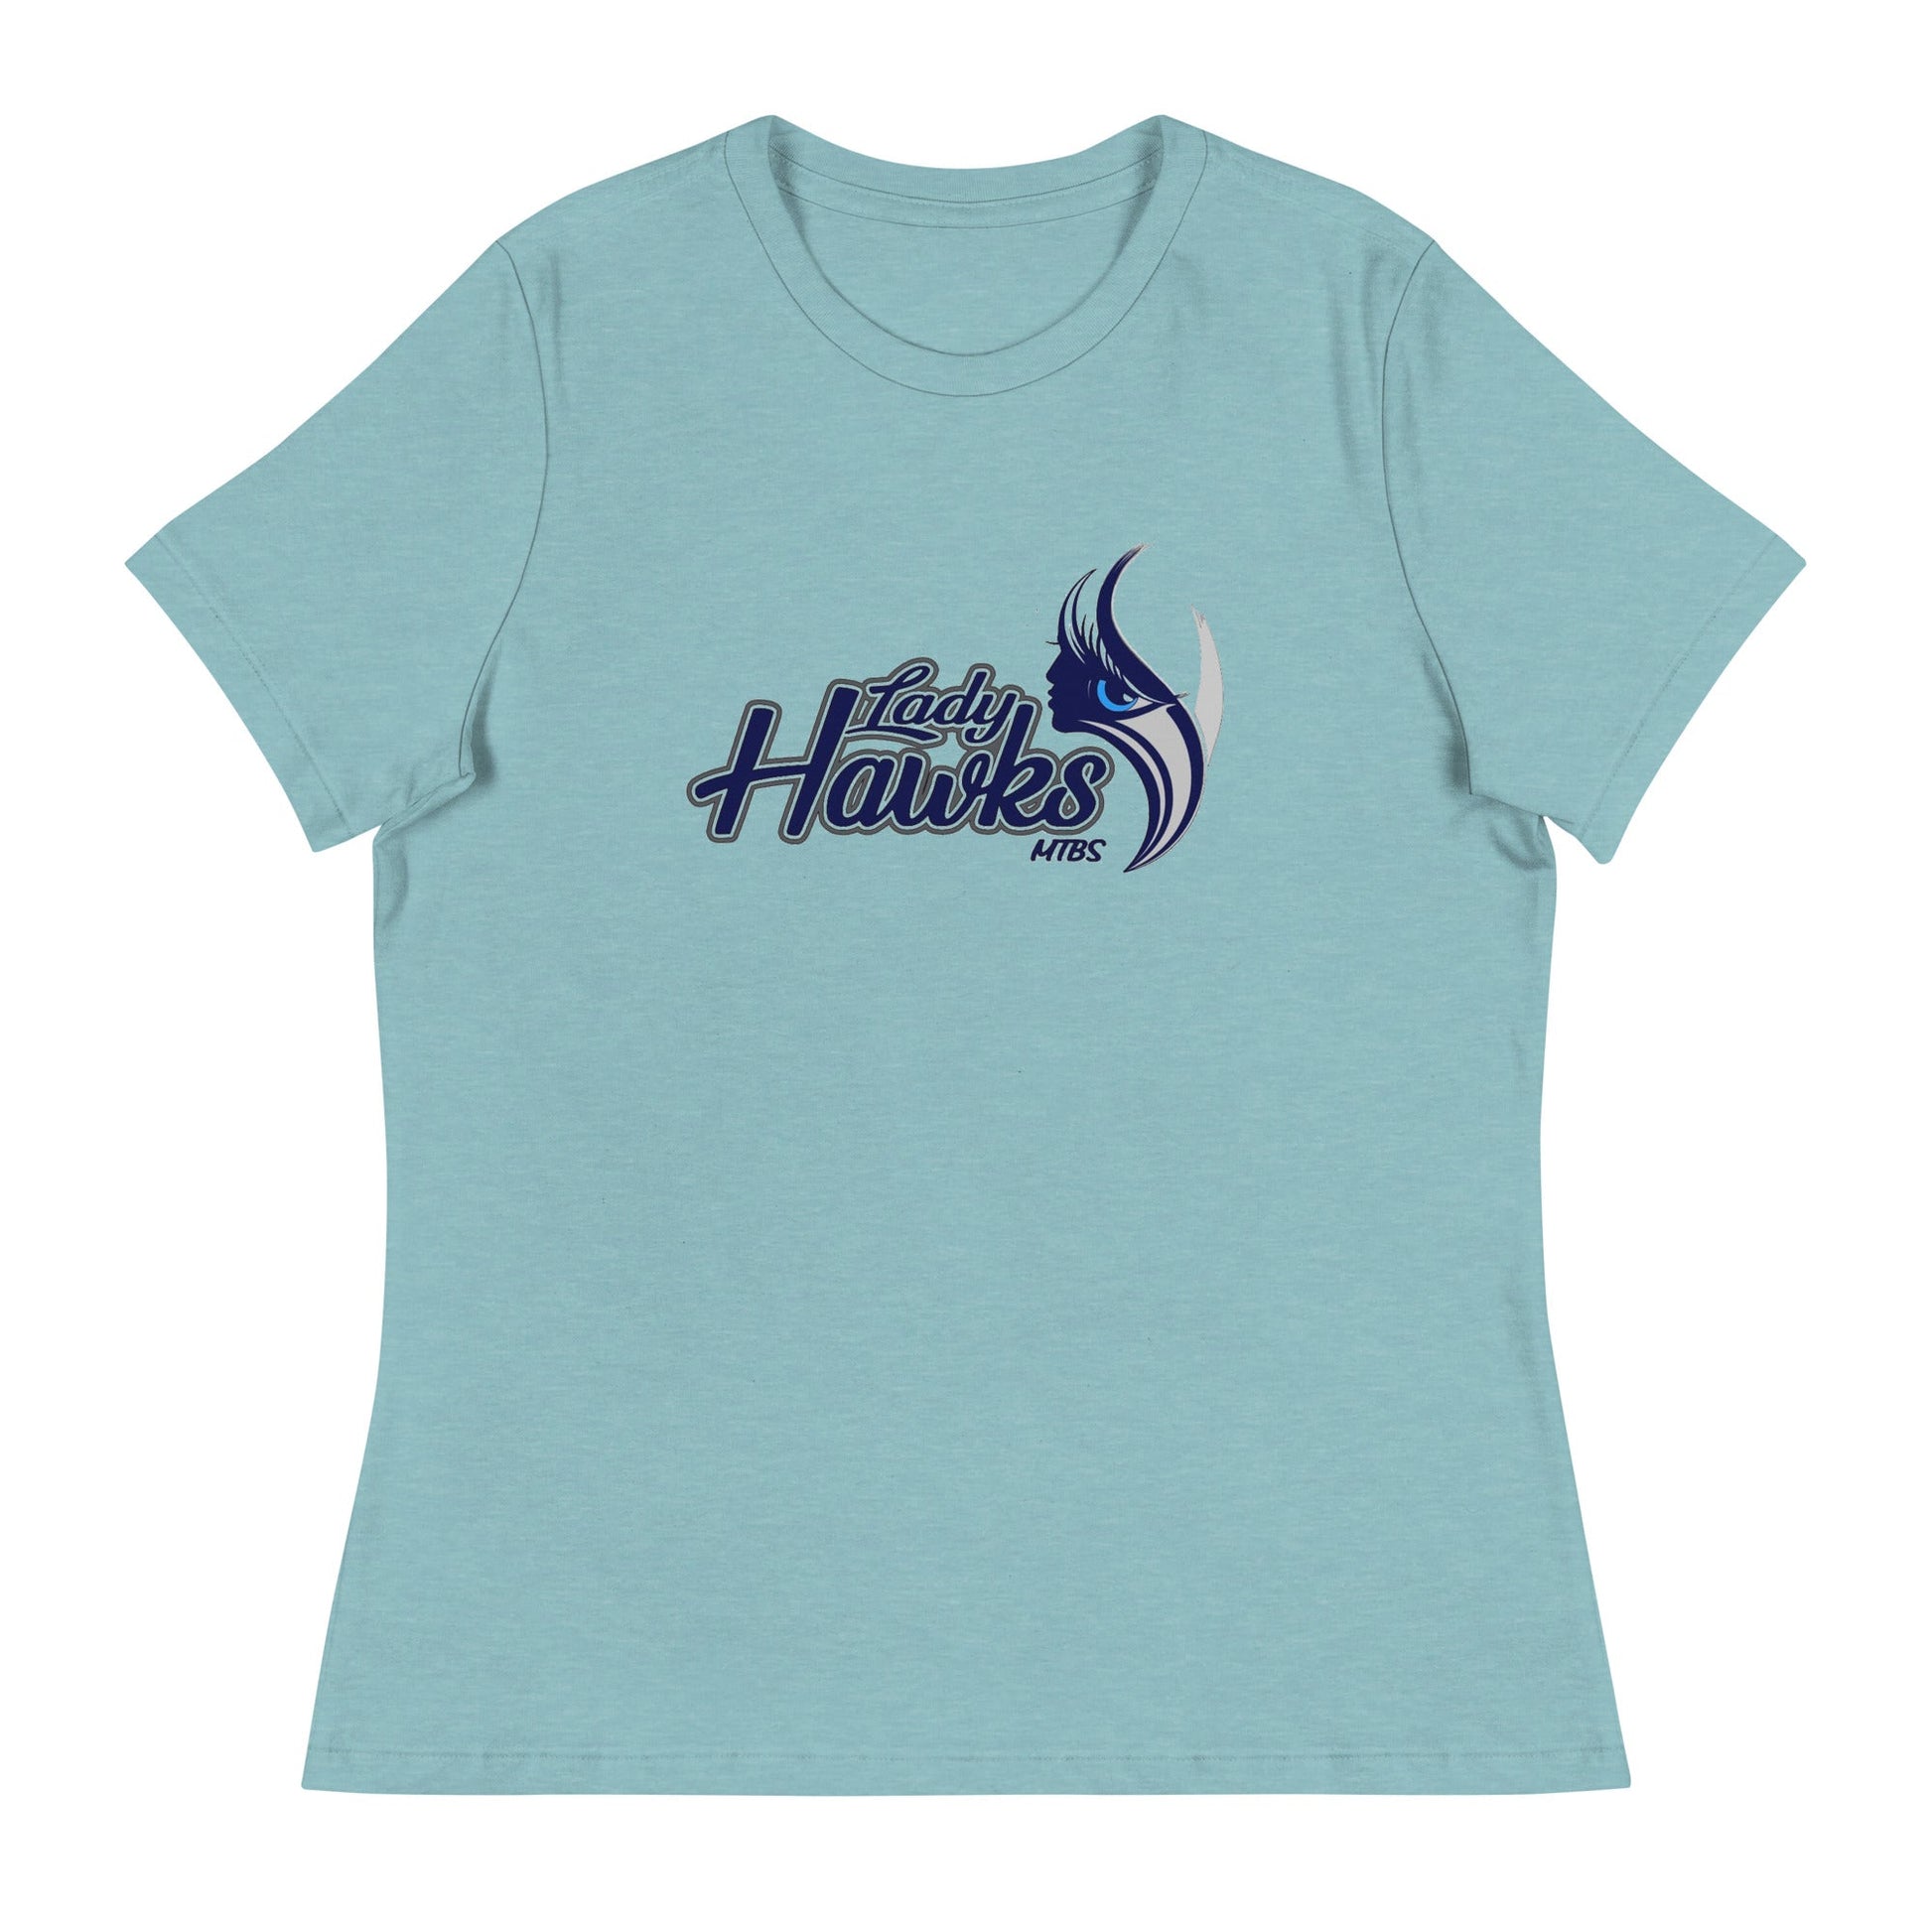 MTBS Lady Hawks Women's Relaxed T-Shirt Bat Club USA